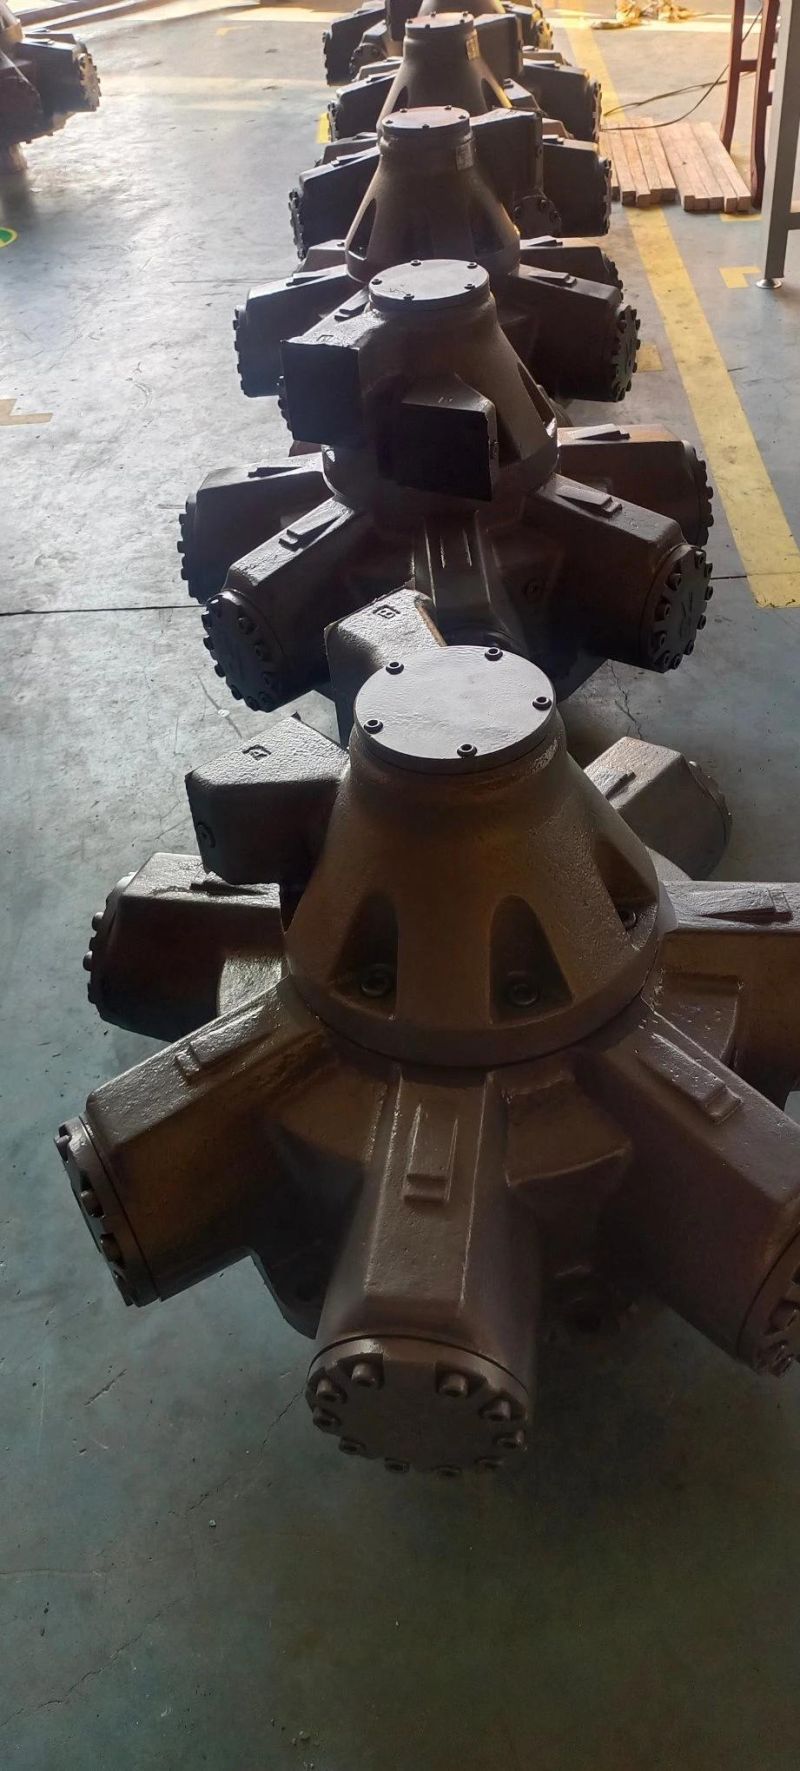 China Manufacturer of Staffa Hydraulic Motor Replace Kawasaki Kayaba for Winch and Mining Machine Motor.